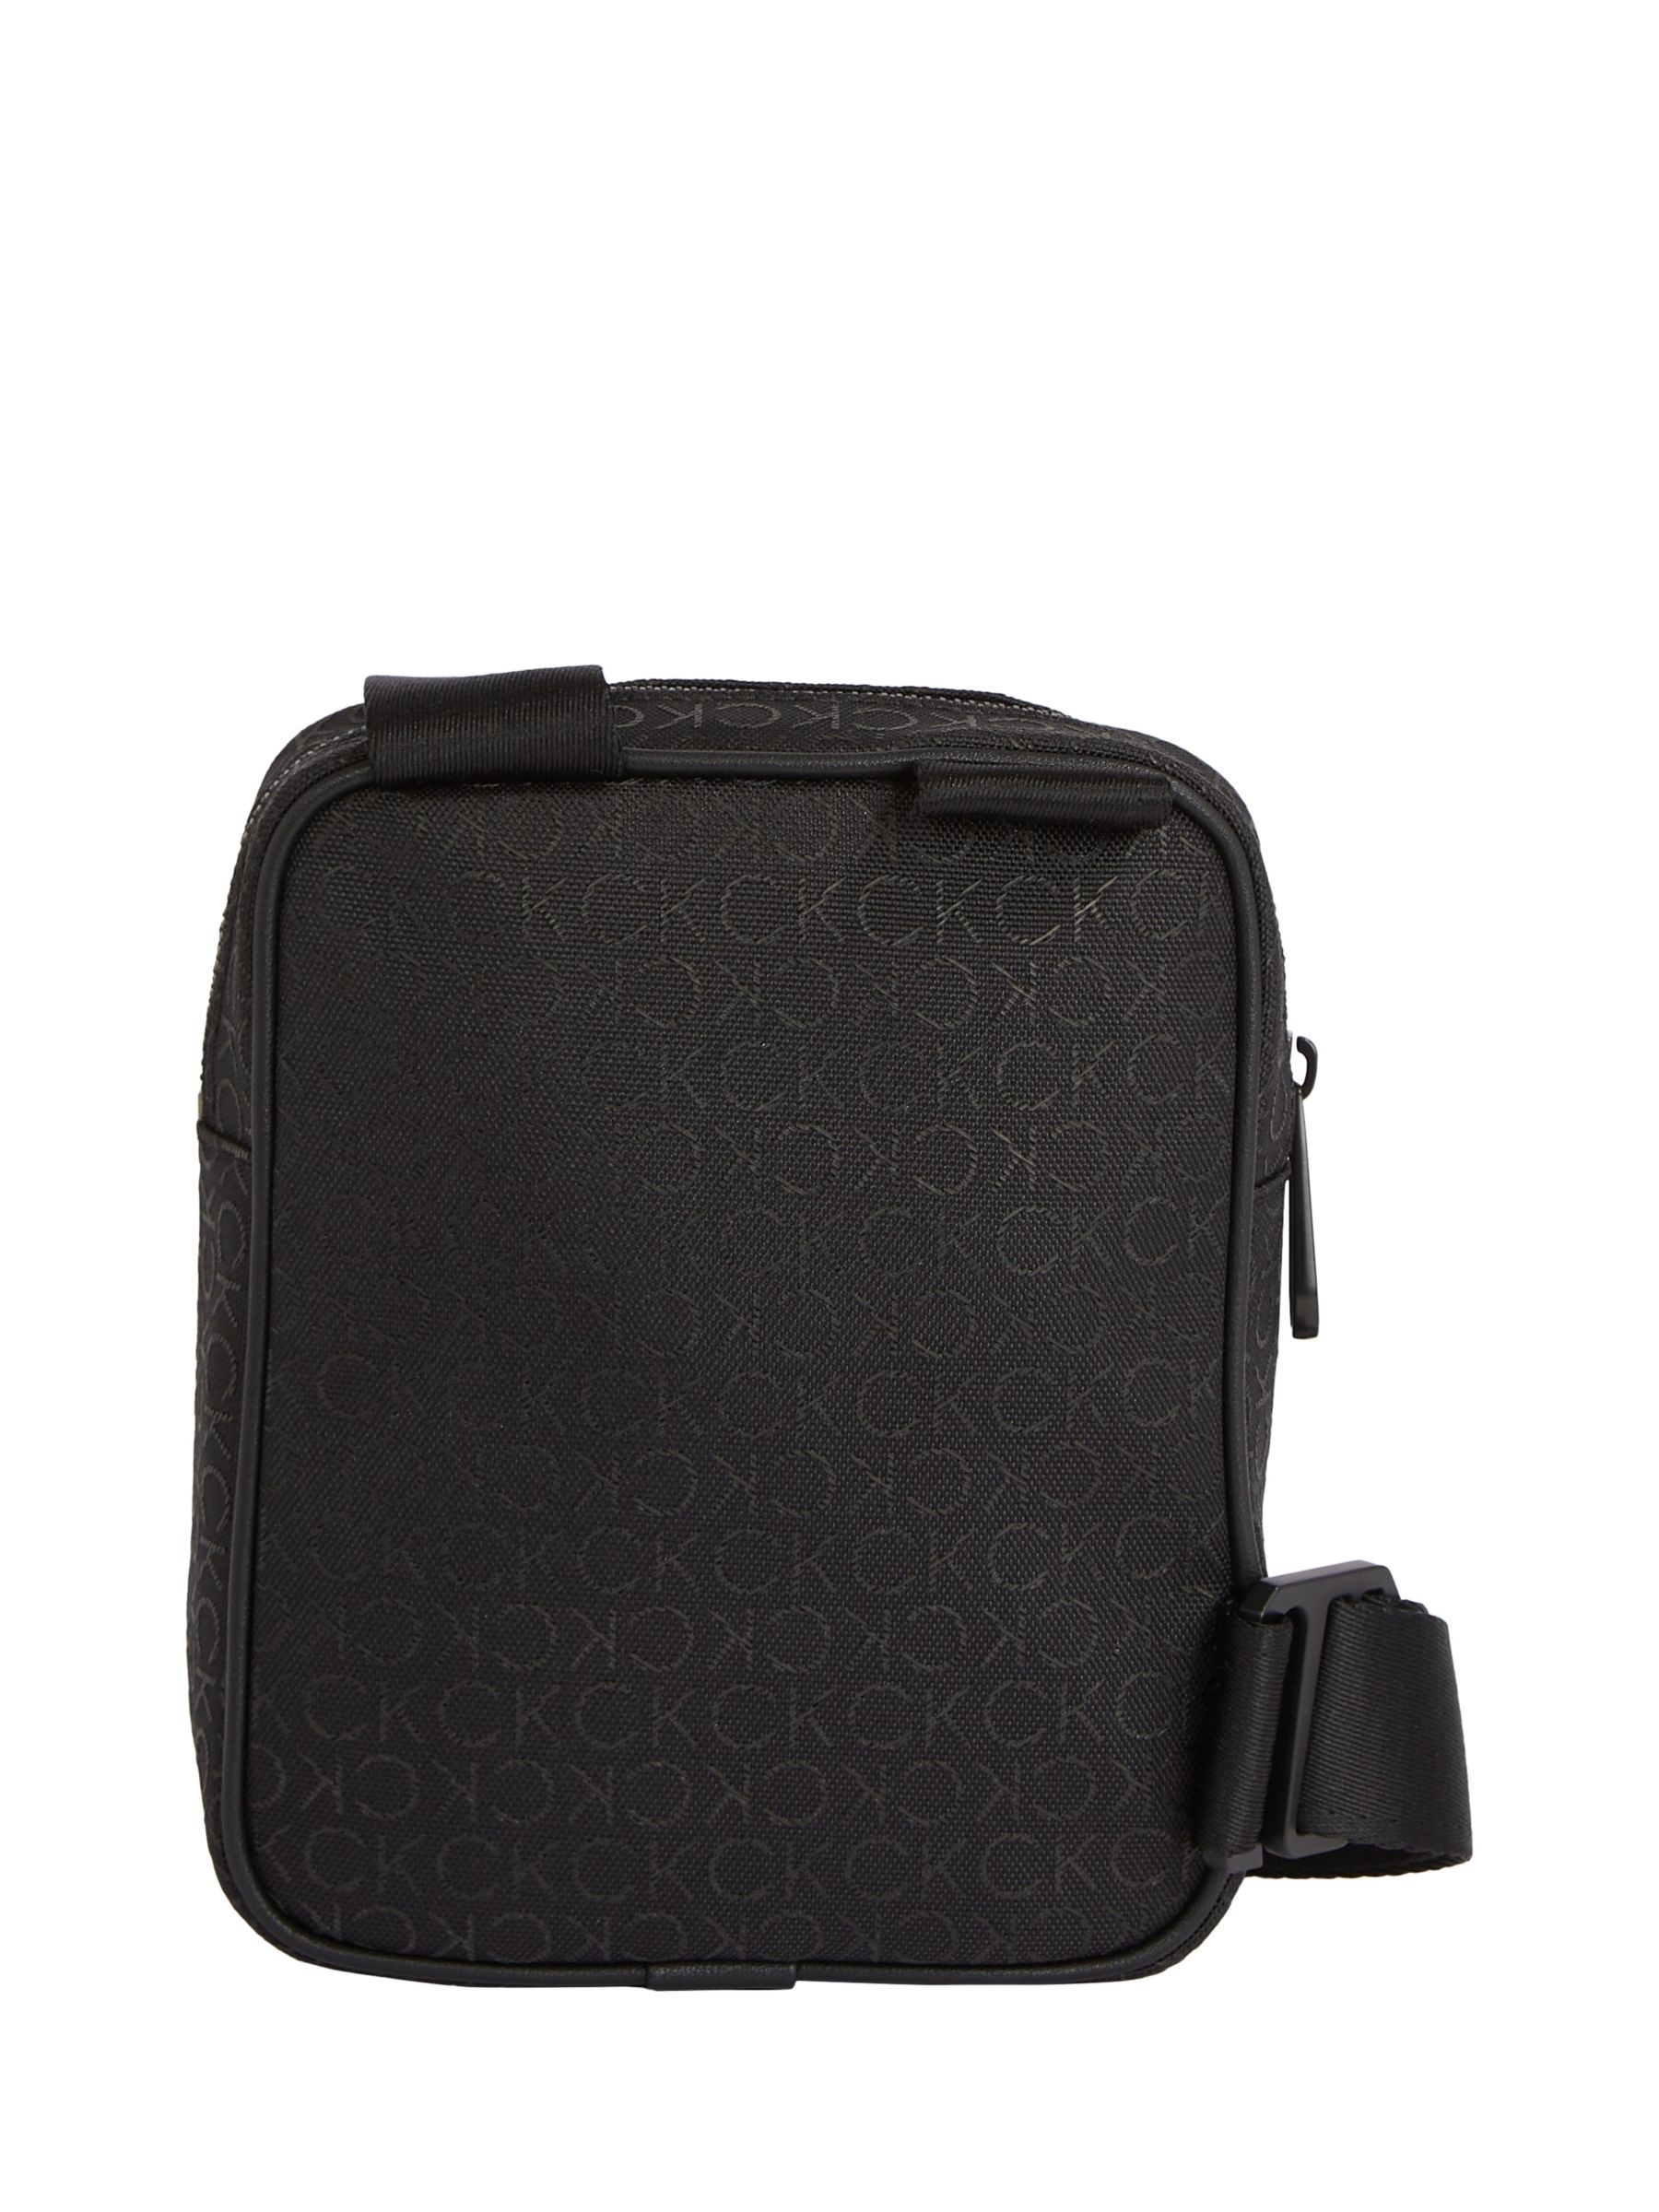 Calvin Klein Messenger Monogram Bag, Black, One Size